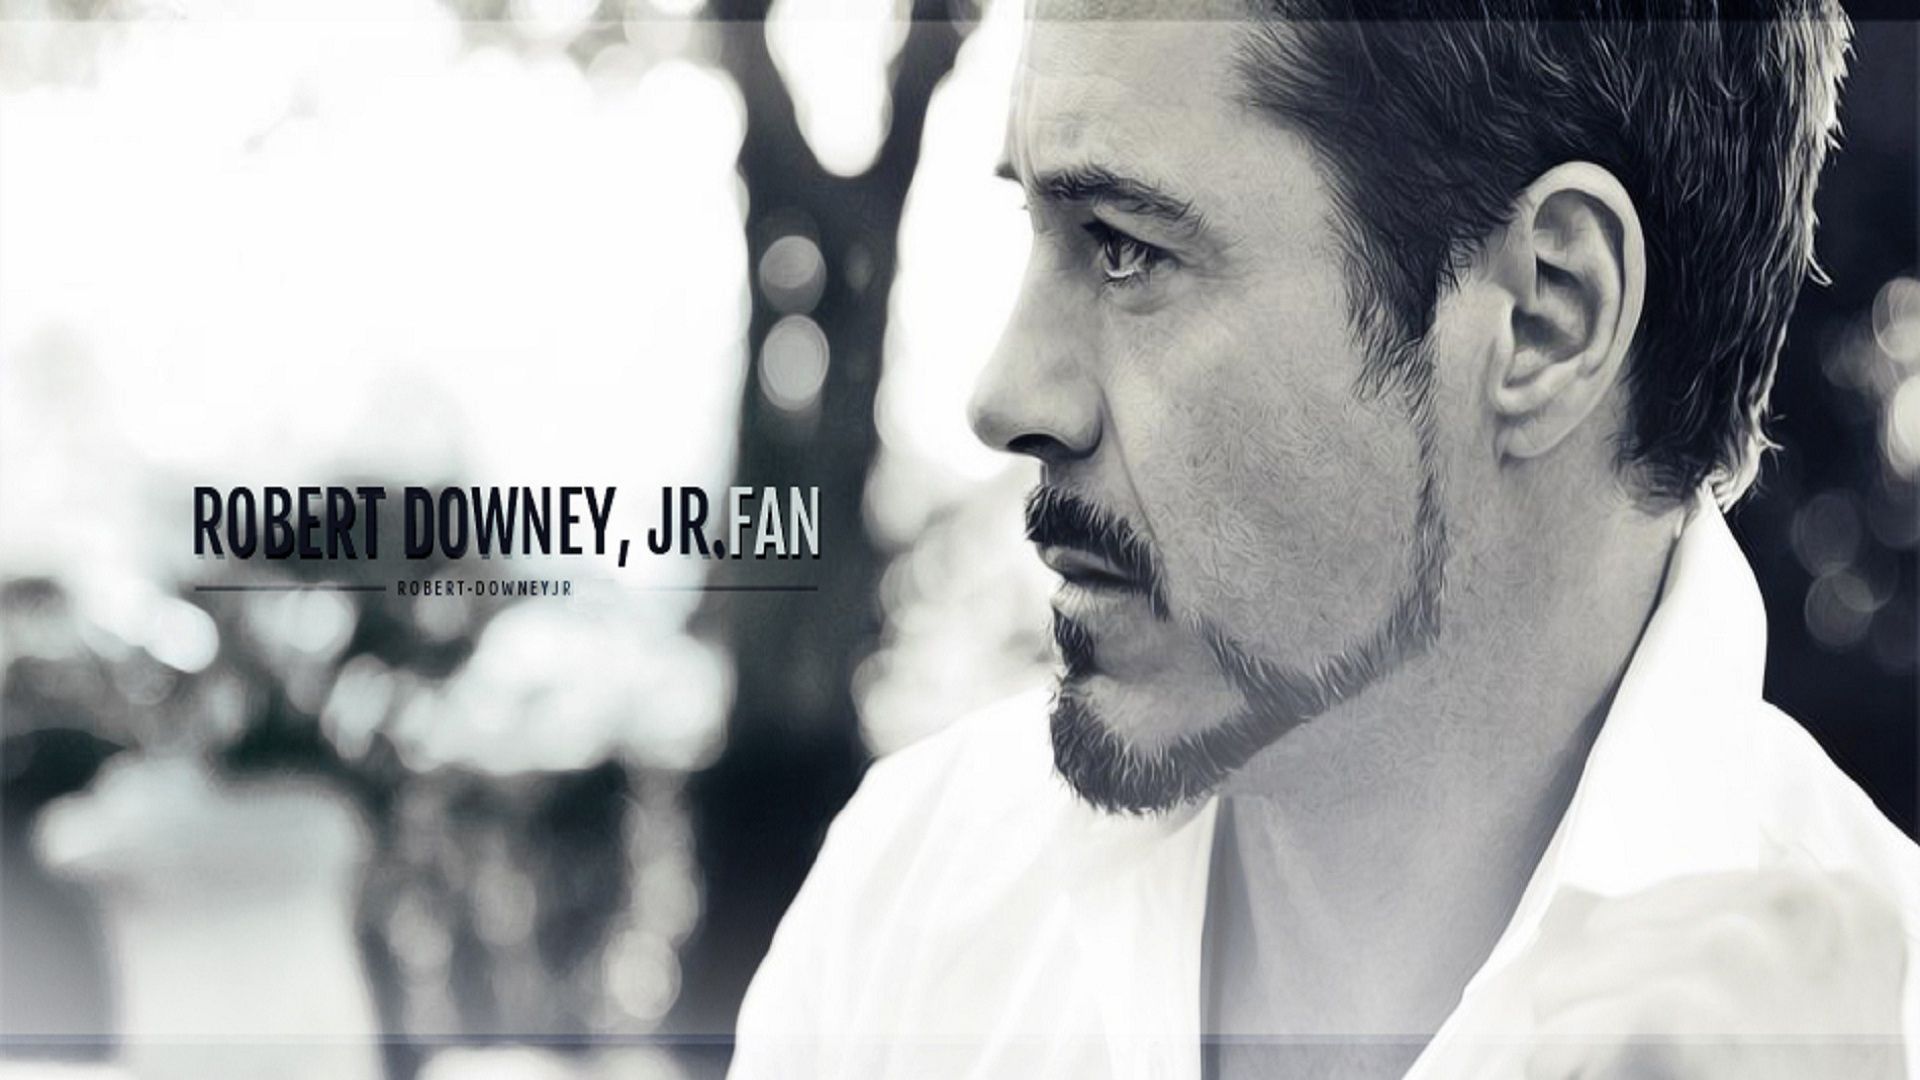 Robert Downey Jr As Iron Man HD Avengers Infinity War Wallpapers  HD  Wallpapers  ID 106079